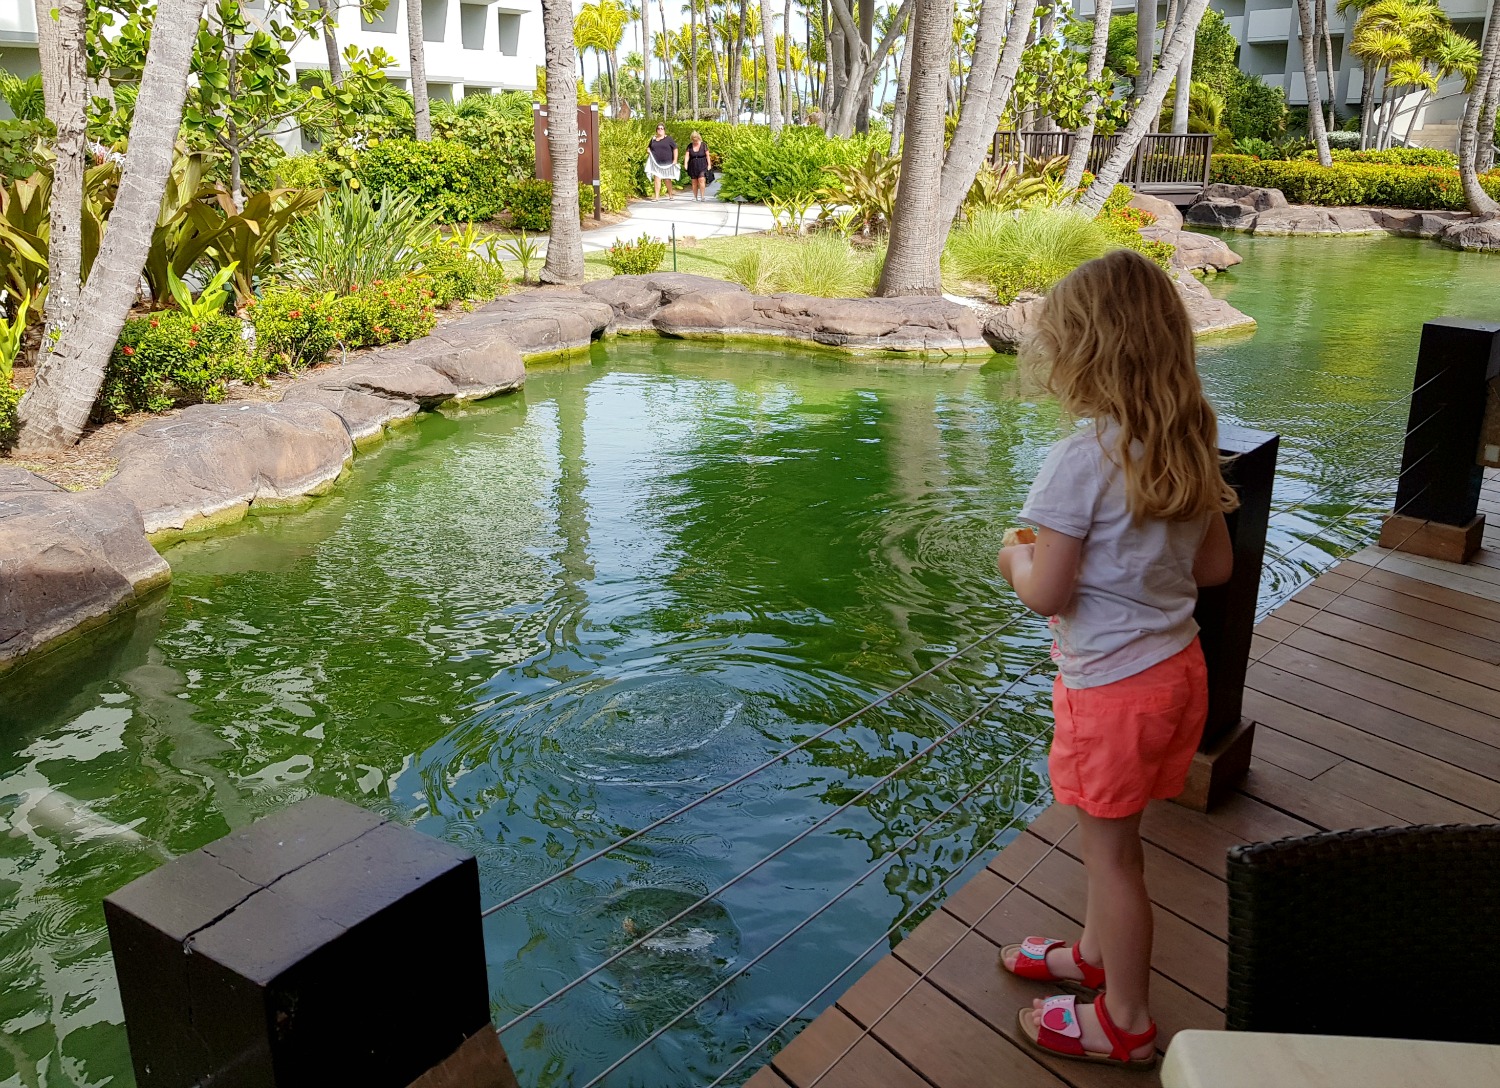 My daughter feeding the koi carp in the pond by Laguna restaurant at Hilton Aruba resort on Palm Beach